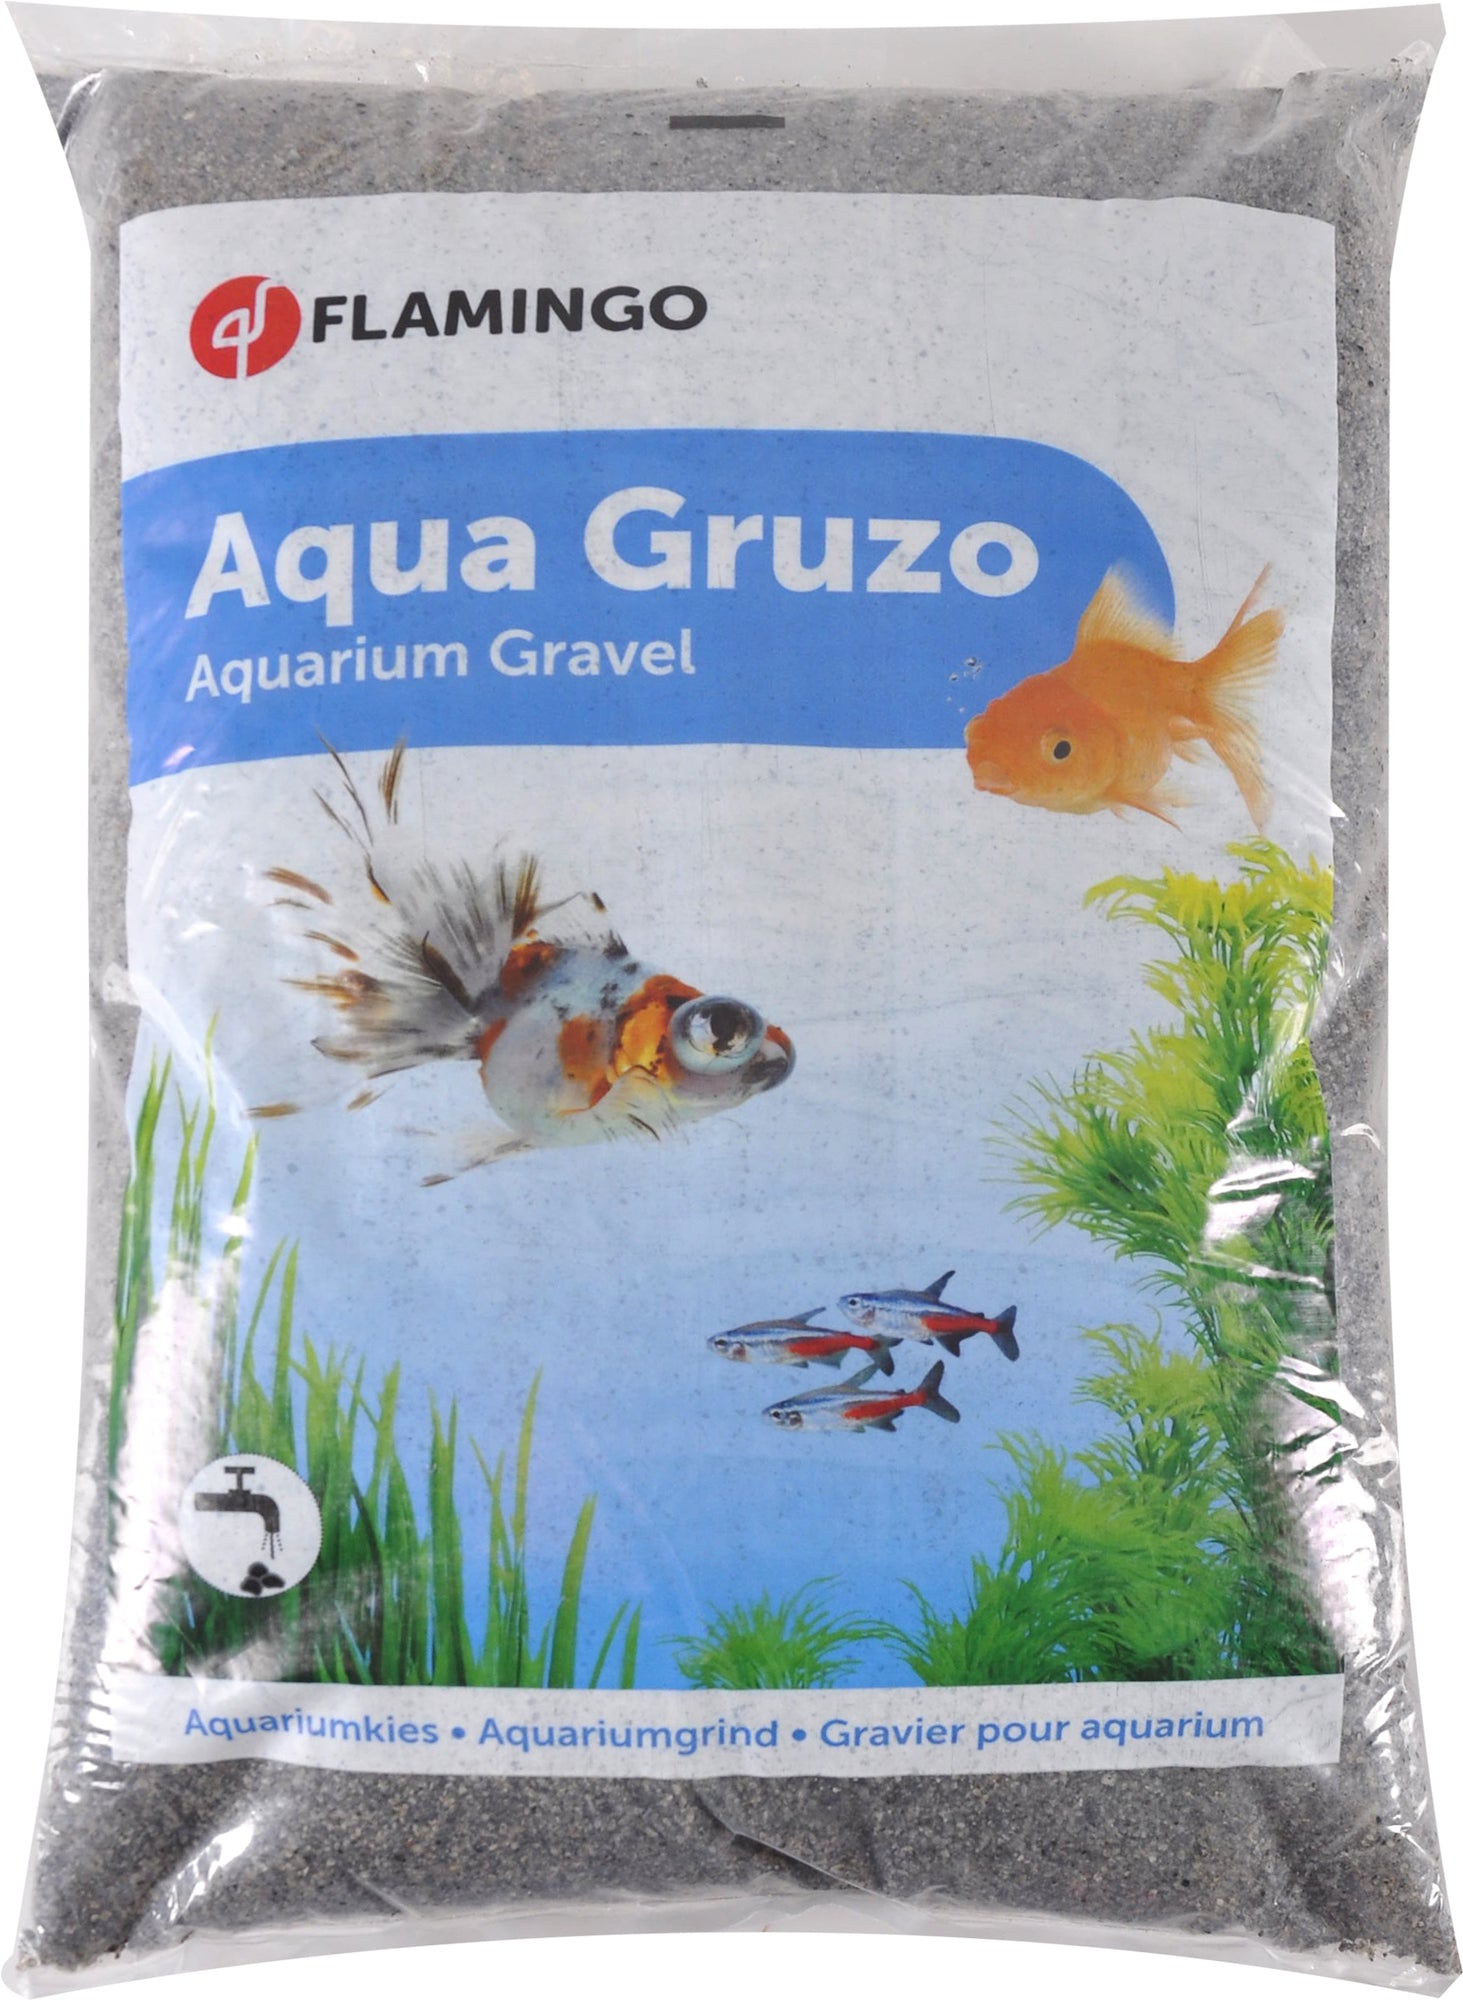 aquariumgrind Firenza Mix - Huisdierplezier